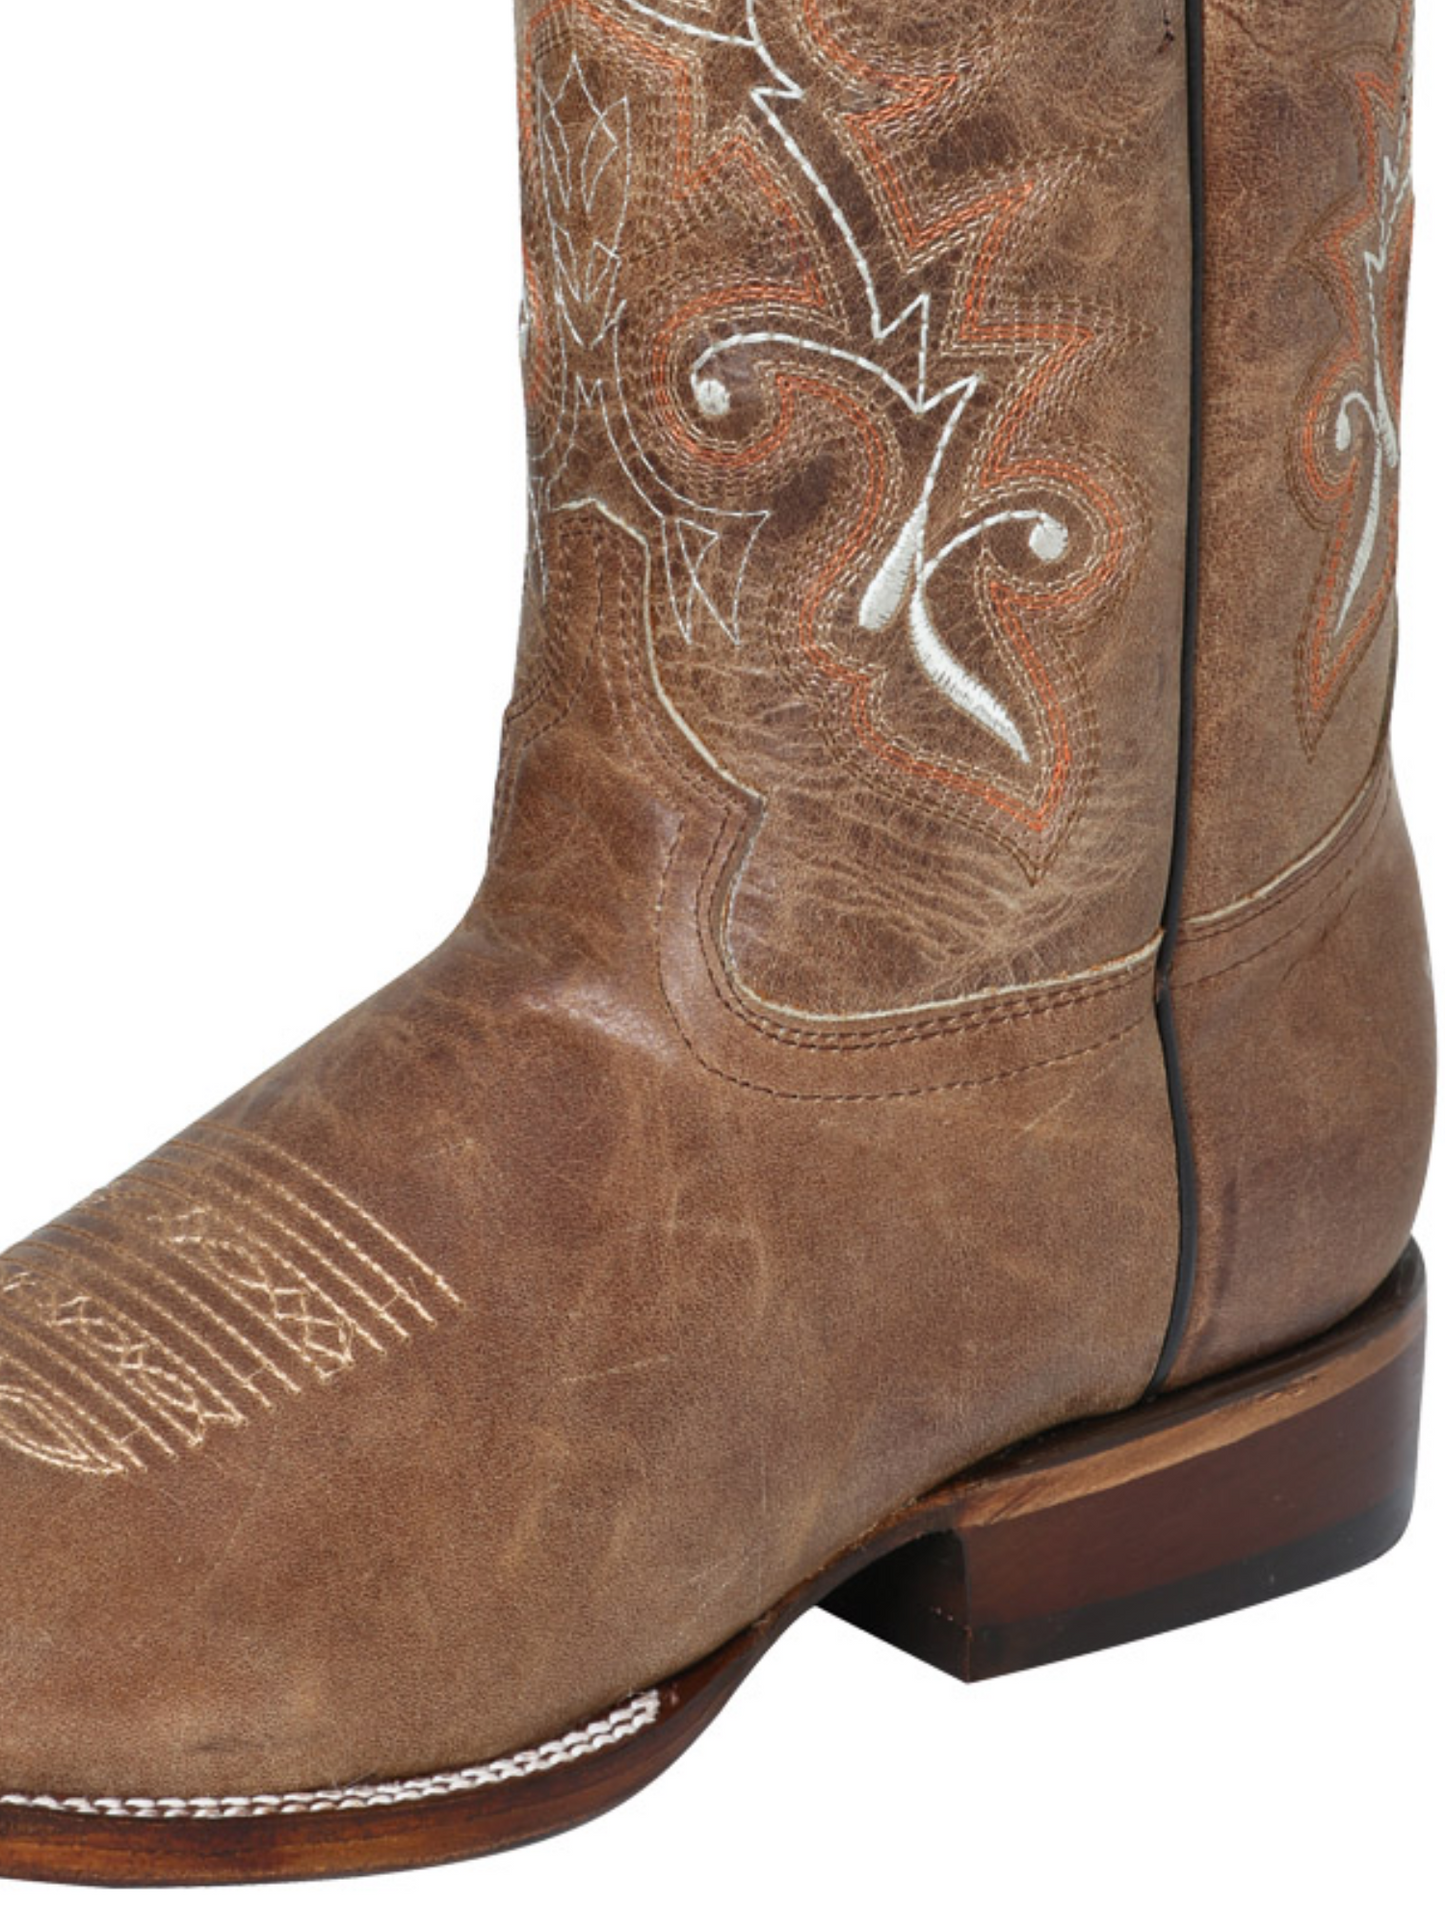 Classic Genuine Leather Rodeo Cowboy Boots for Men 'El Señor de los Cielos' - ID: 124068 Cowboy Boots El Señor de los Cielos